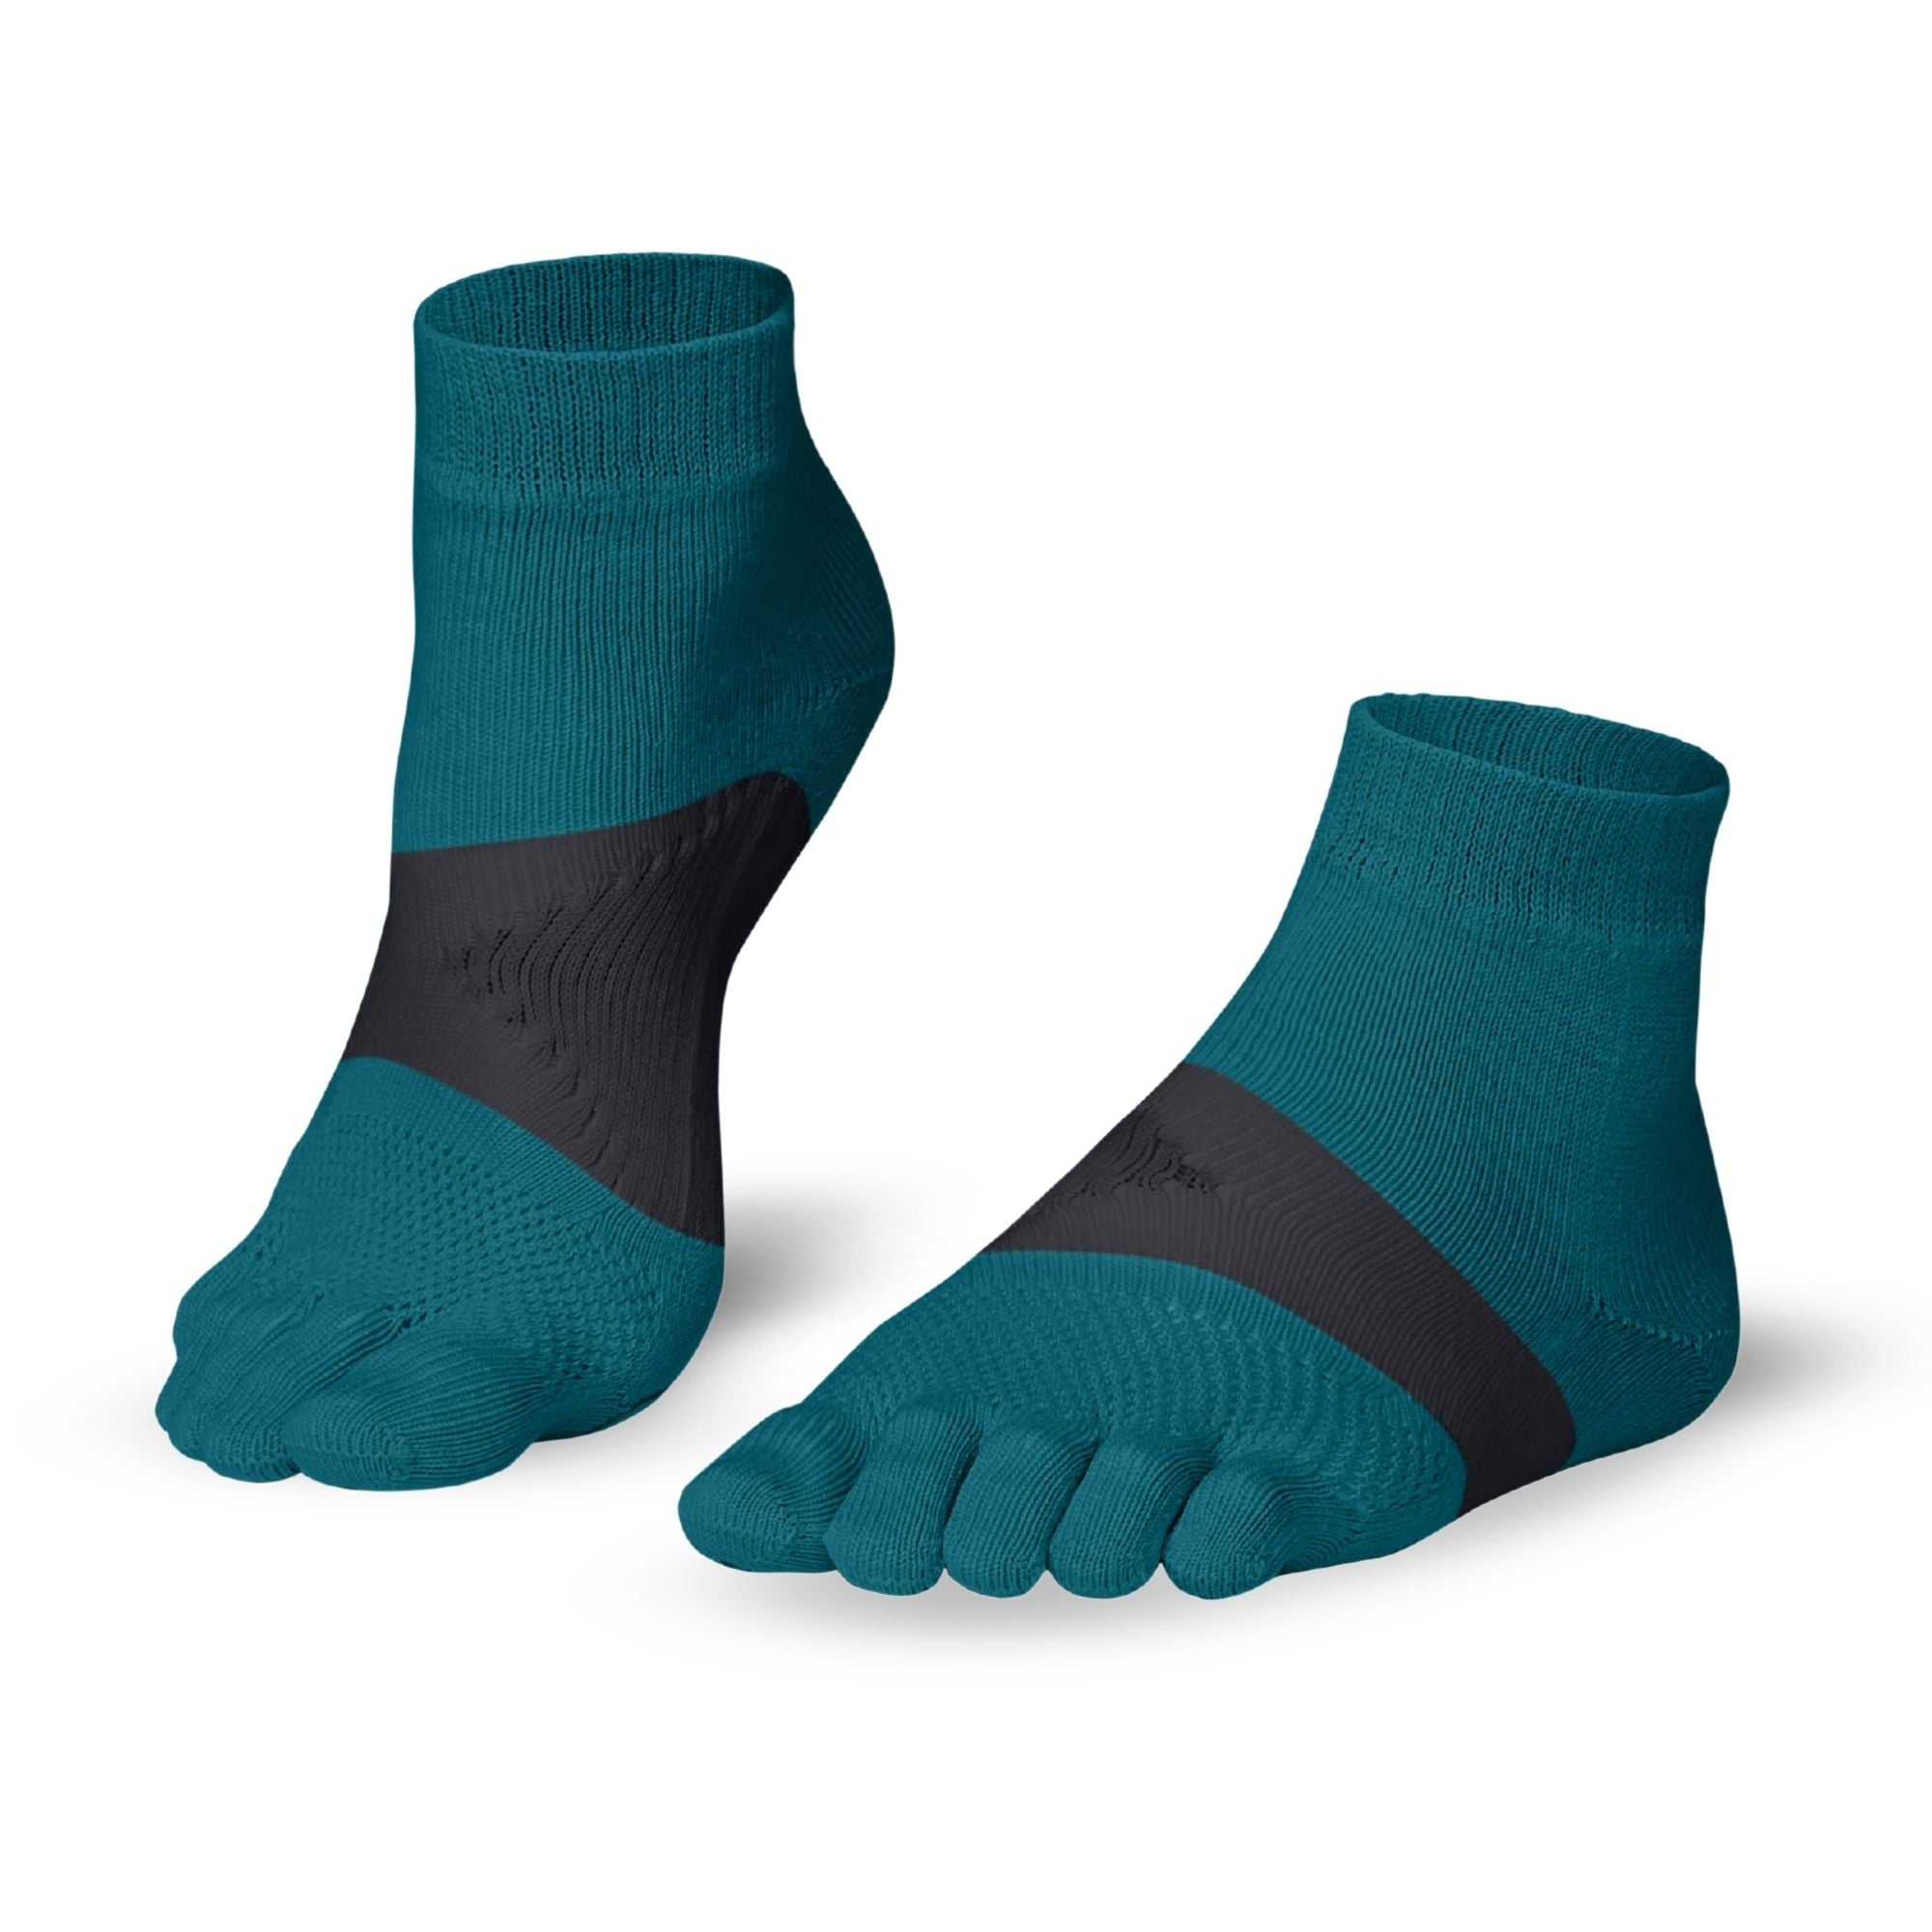 Knitido Marathon TS nogavice za prste - Knitido®